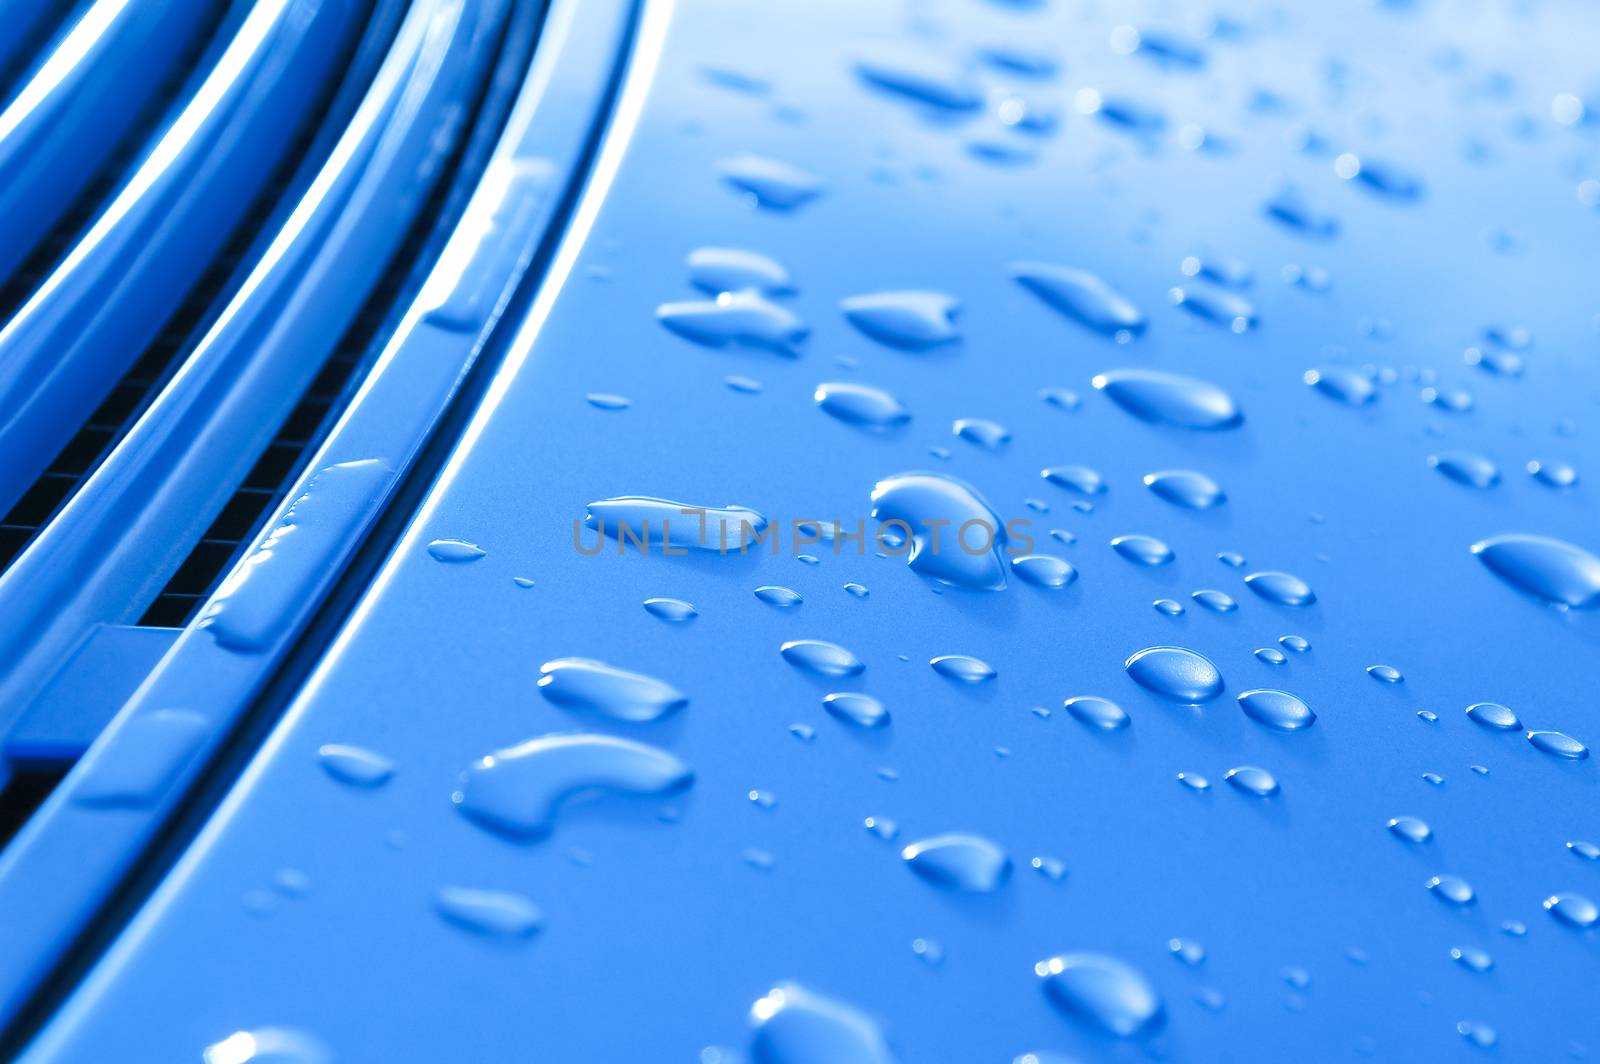 raindrops on a blue metal vehicle panel